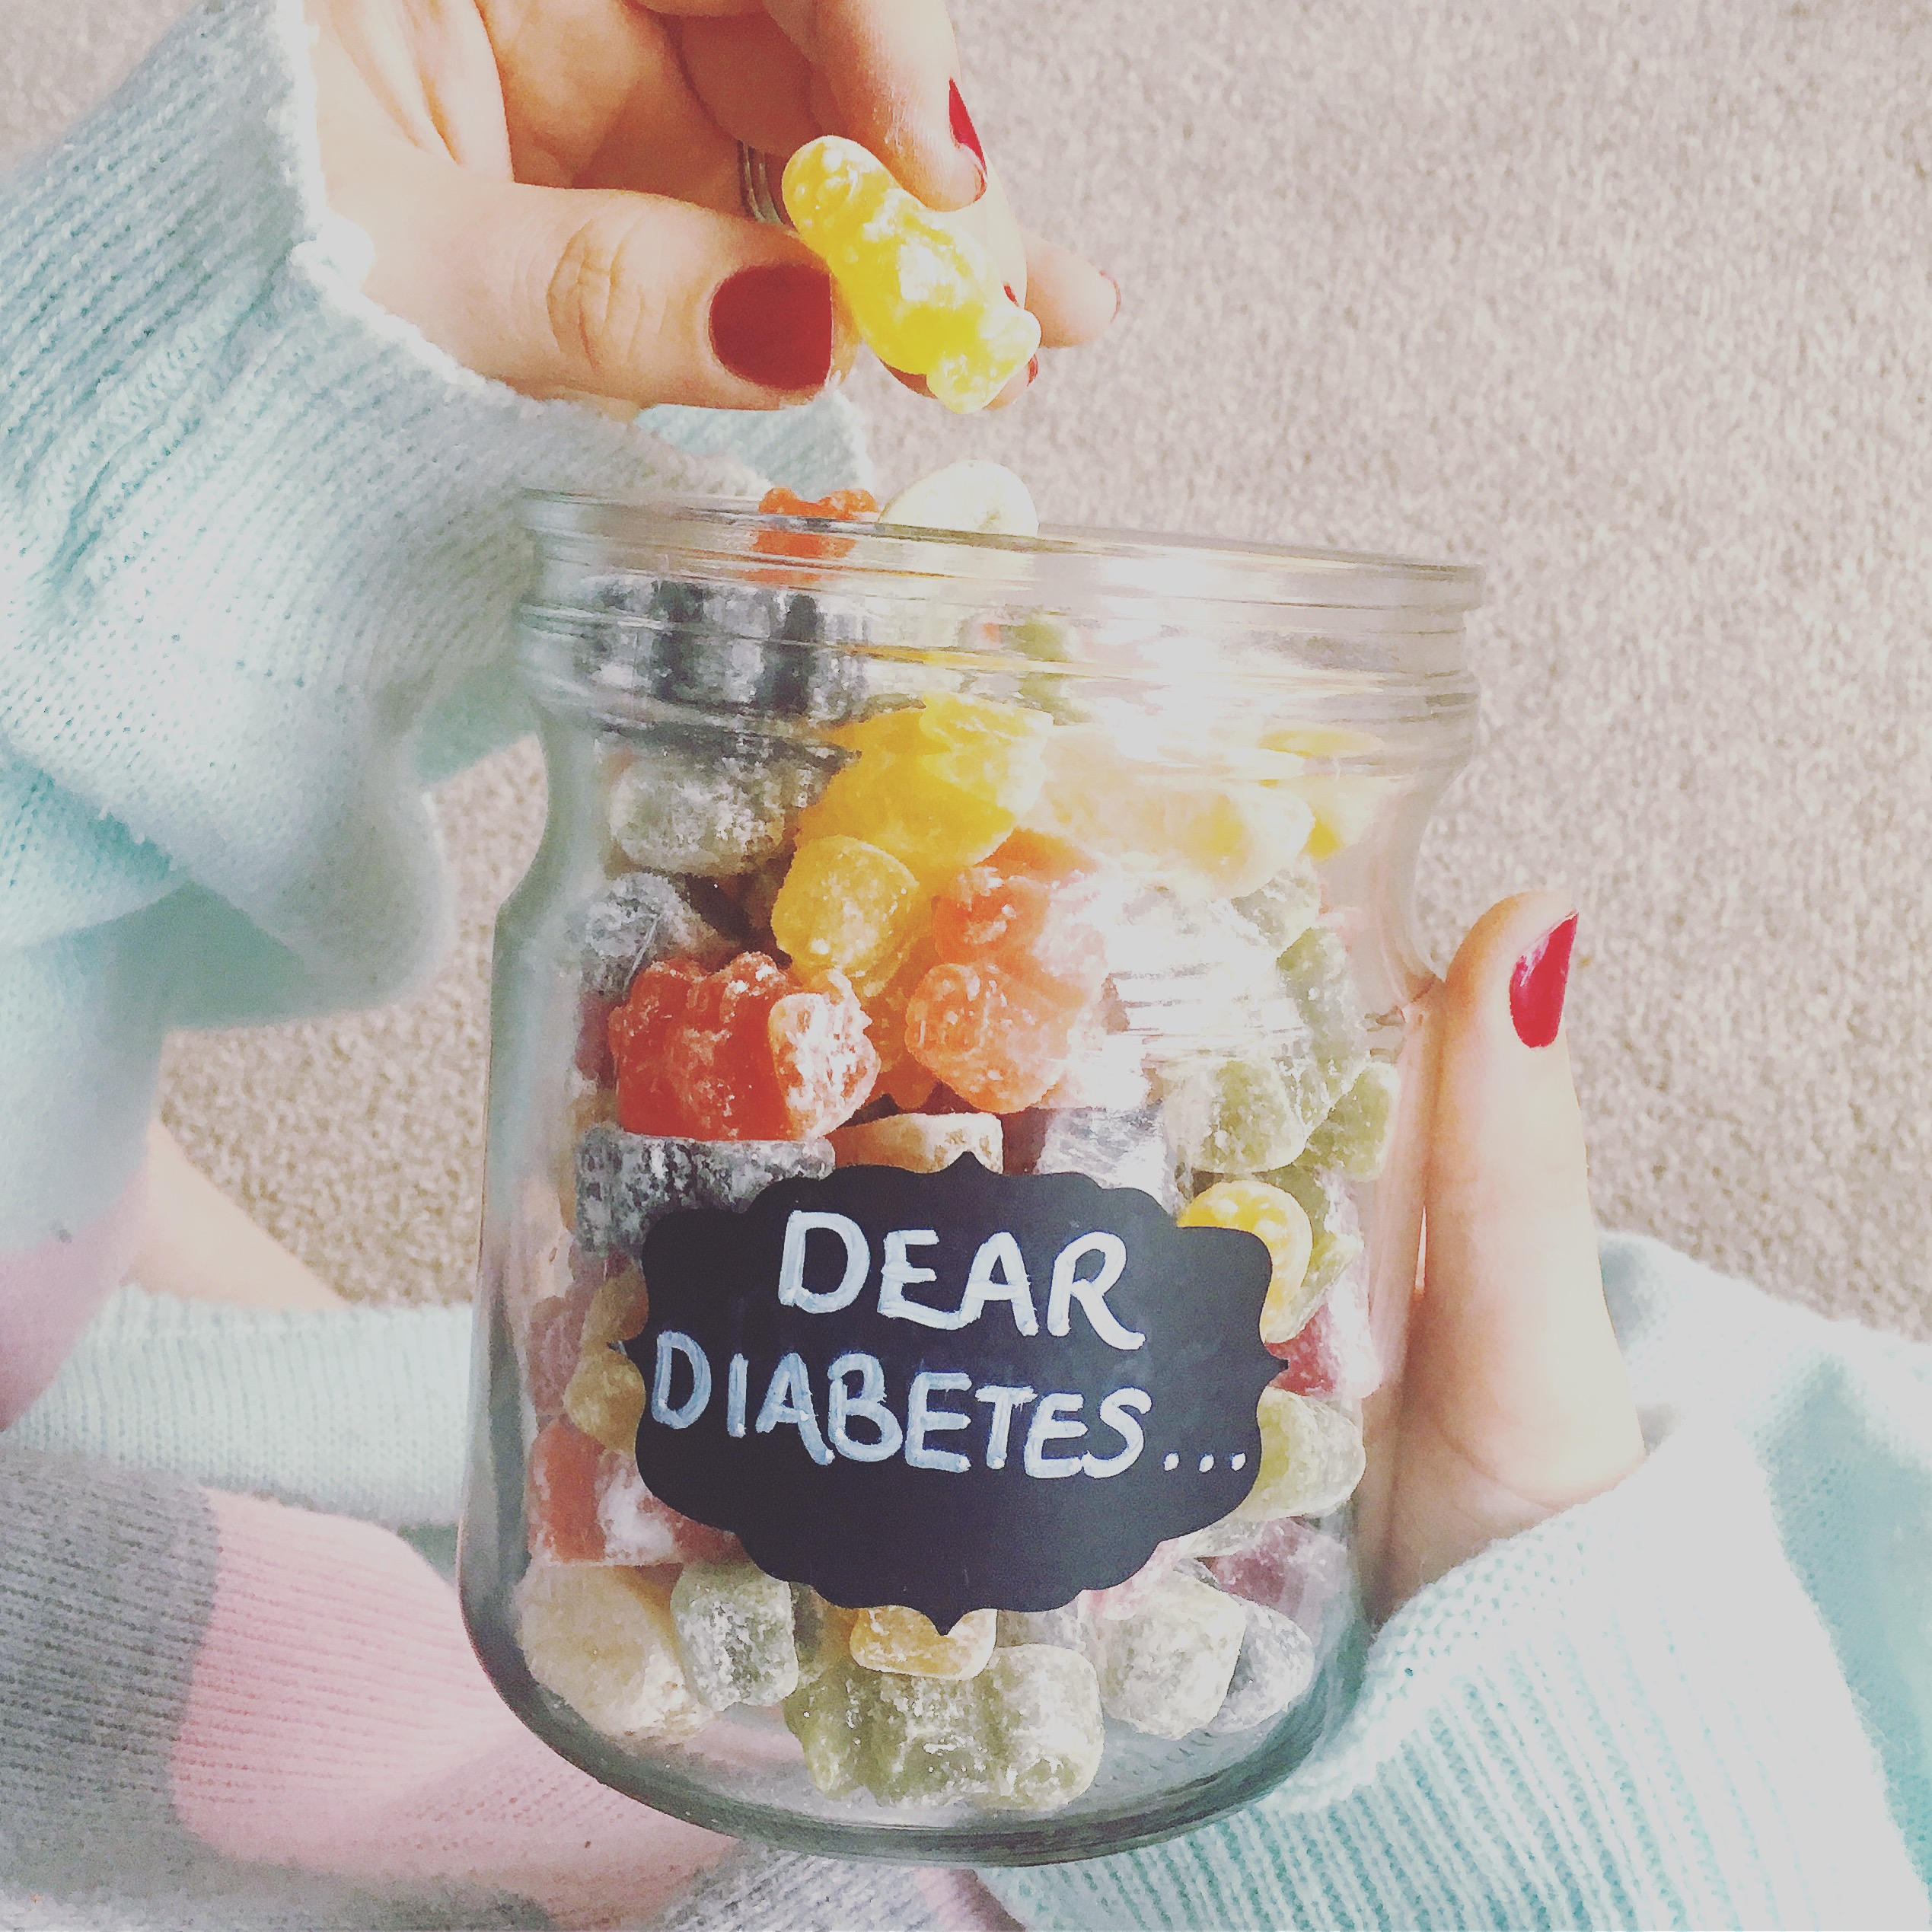 Dear Diabetes…